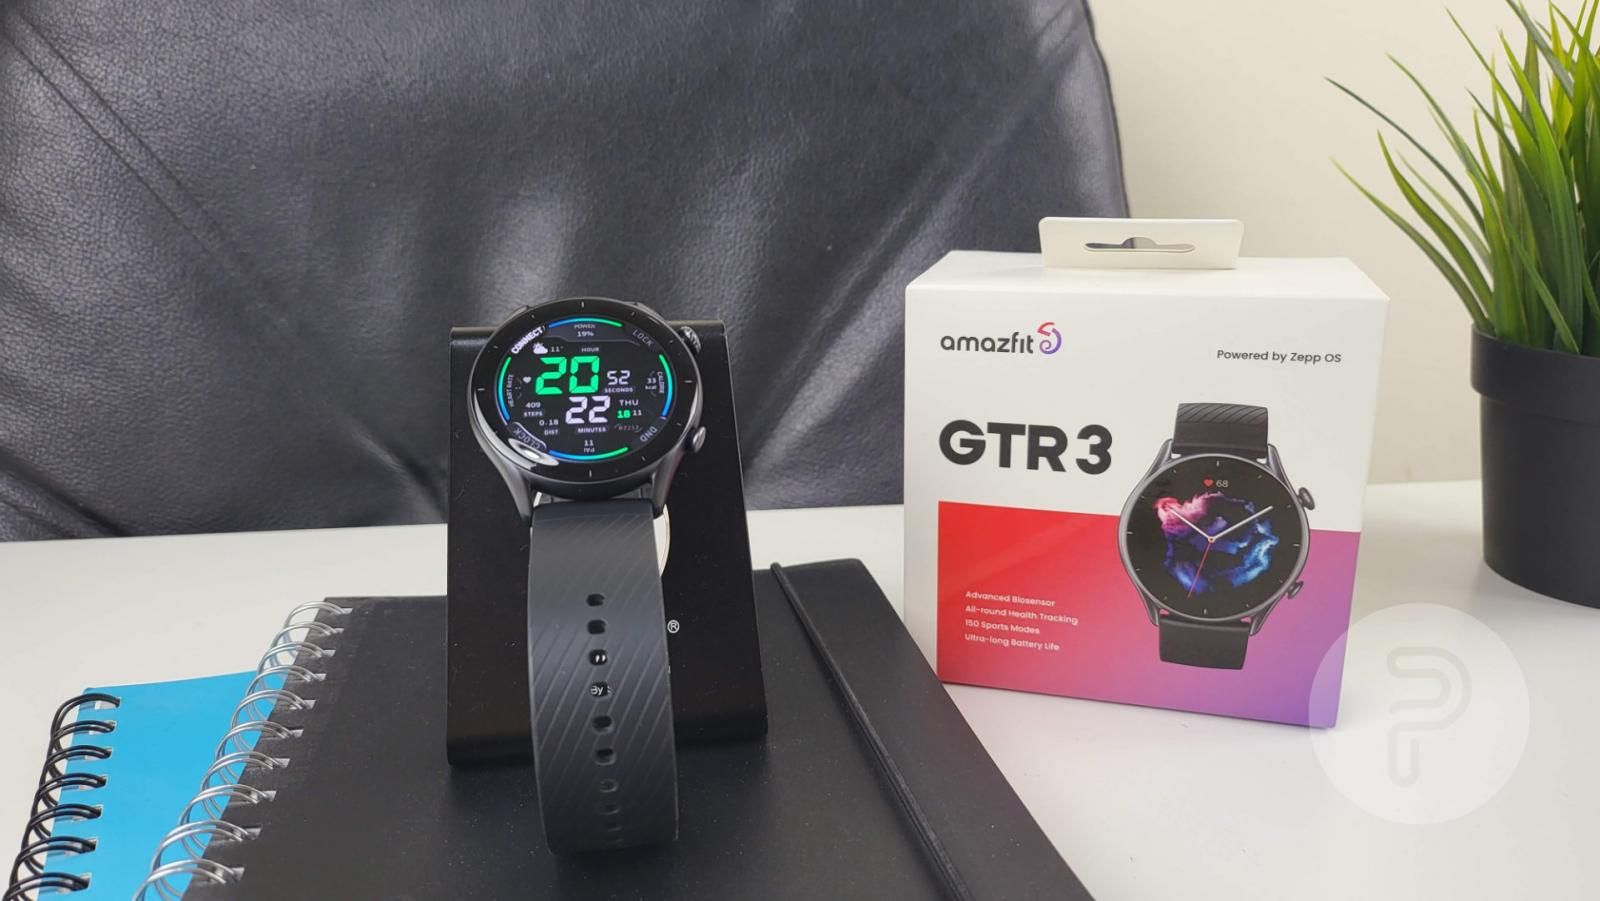 Smartwatch Amazfit GTR 3